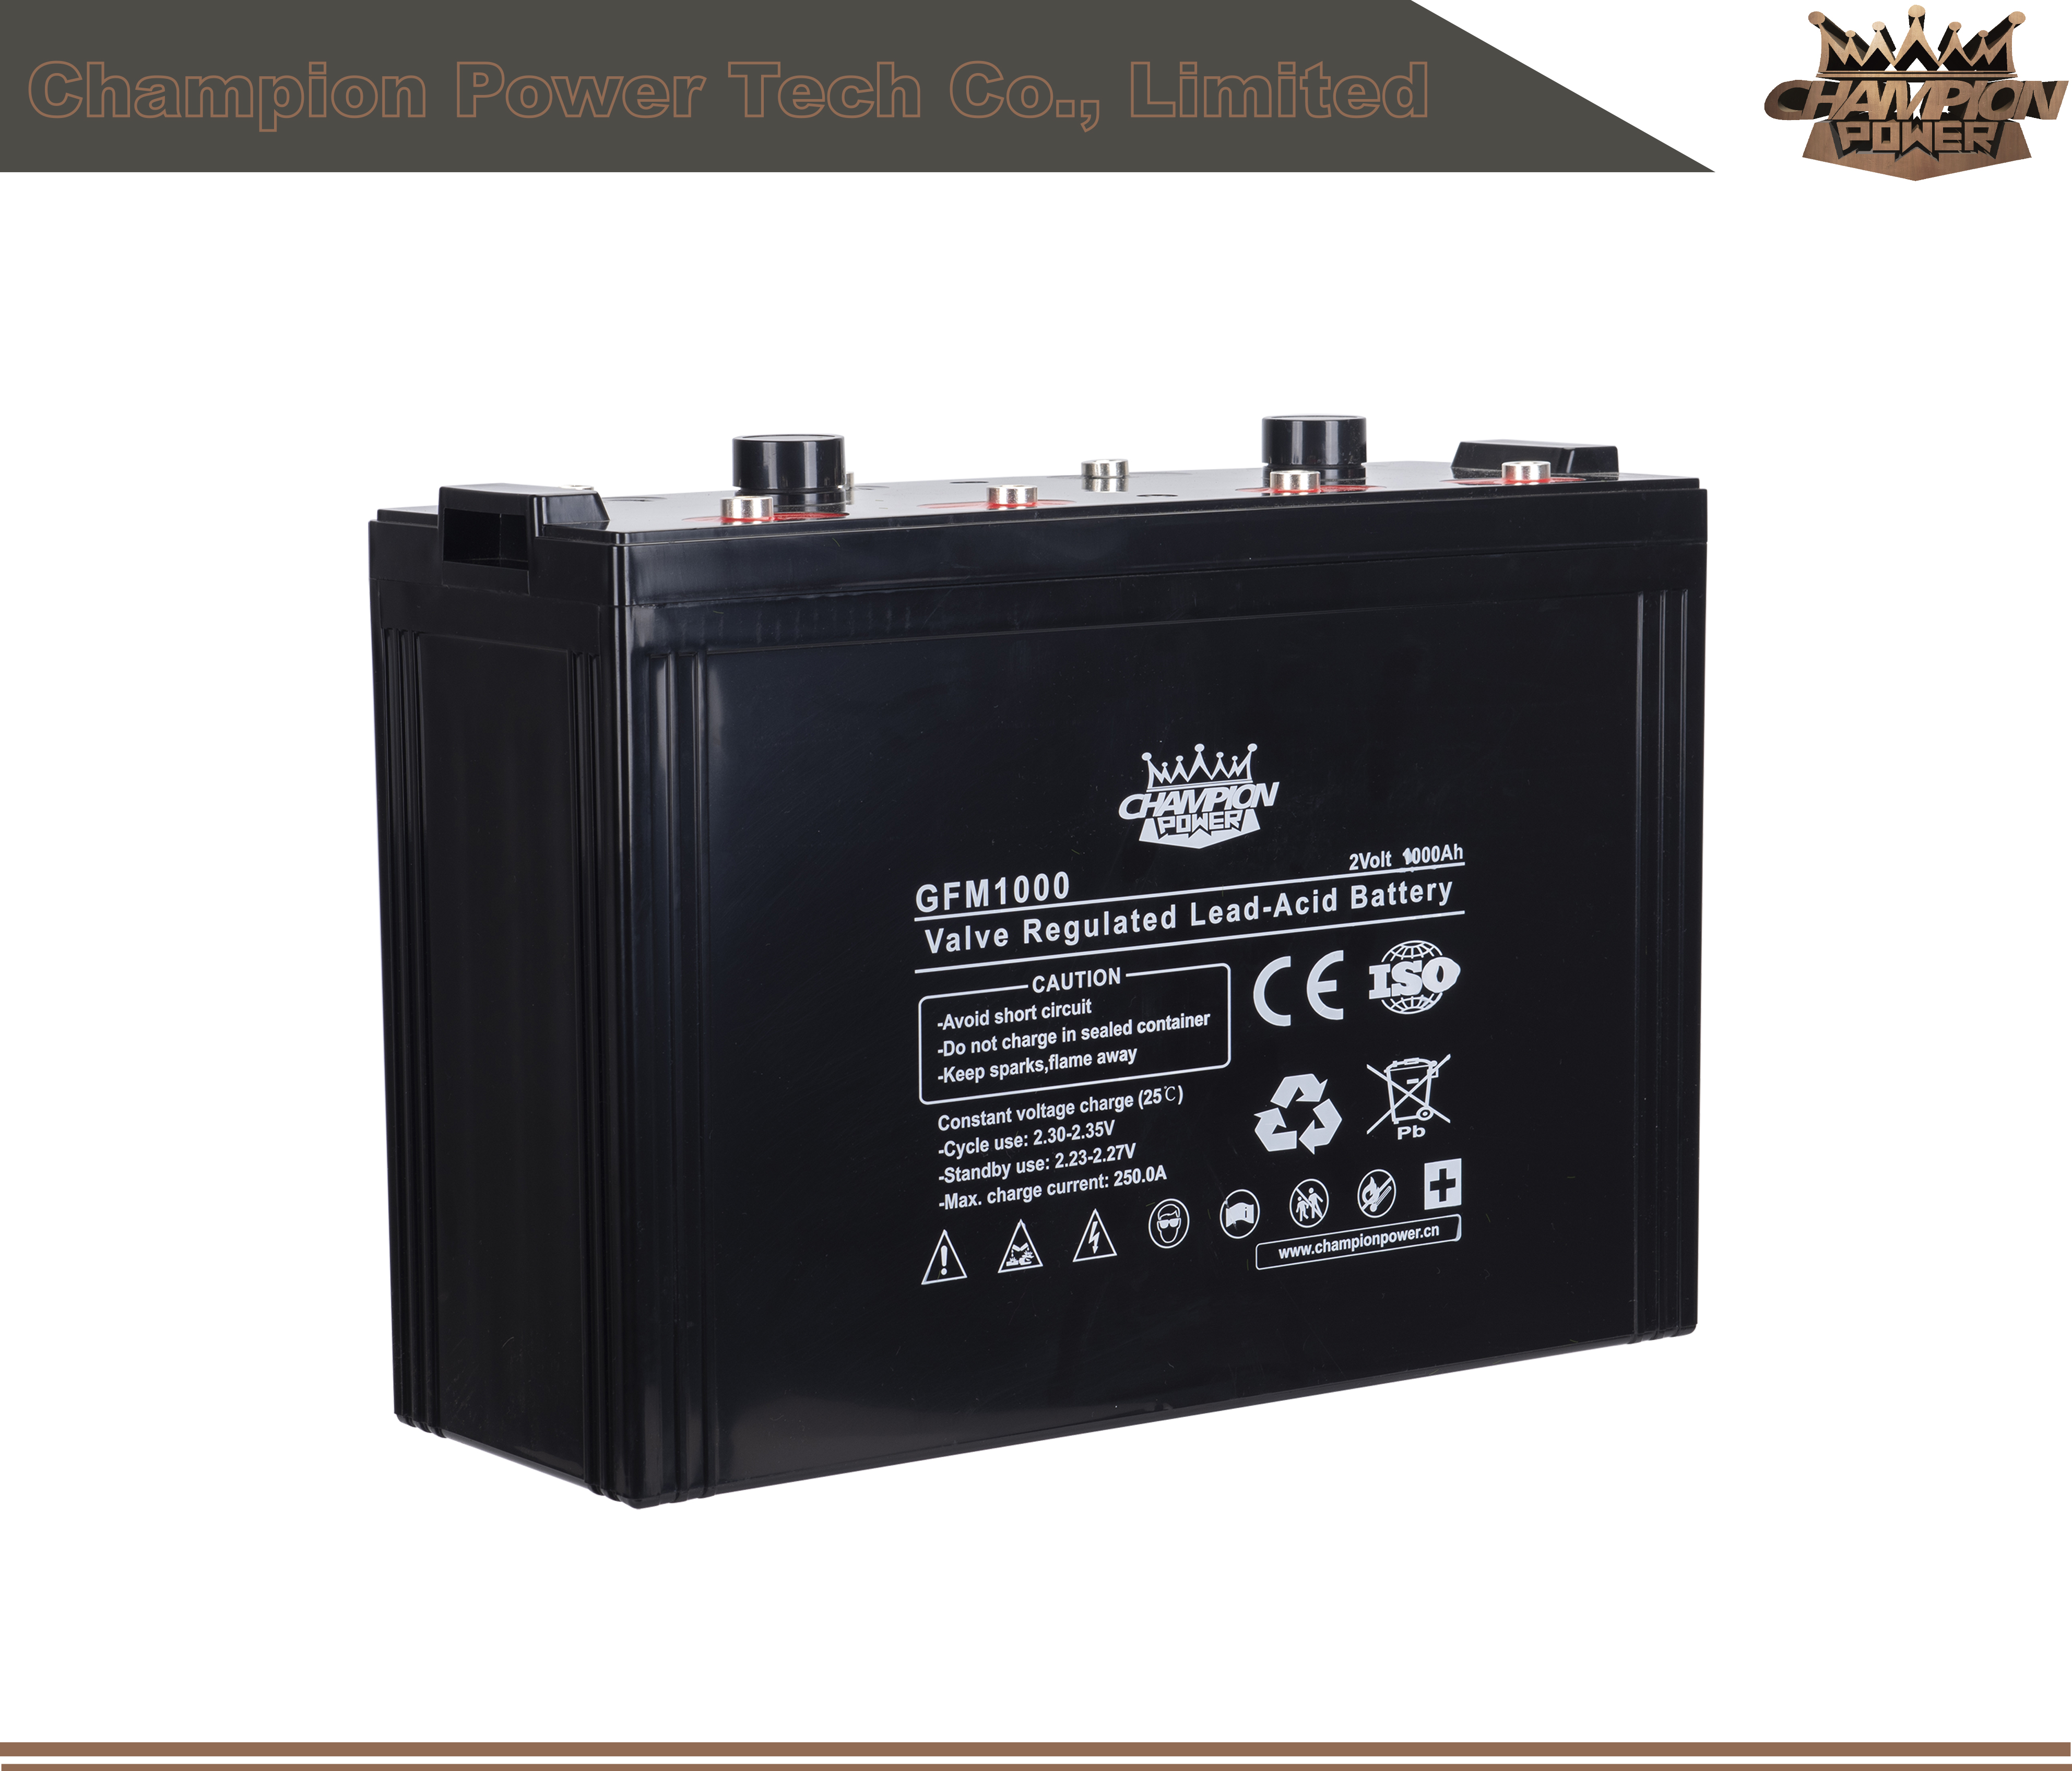 GFM1000 2V1000Ah Lead Acid Battery